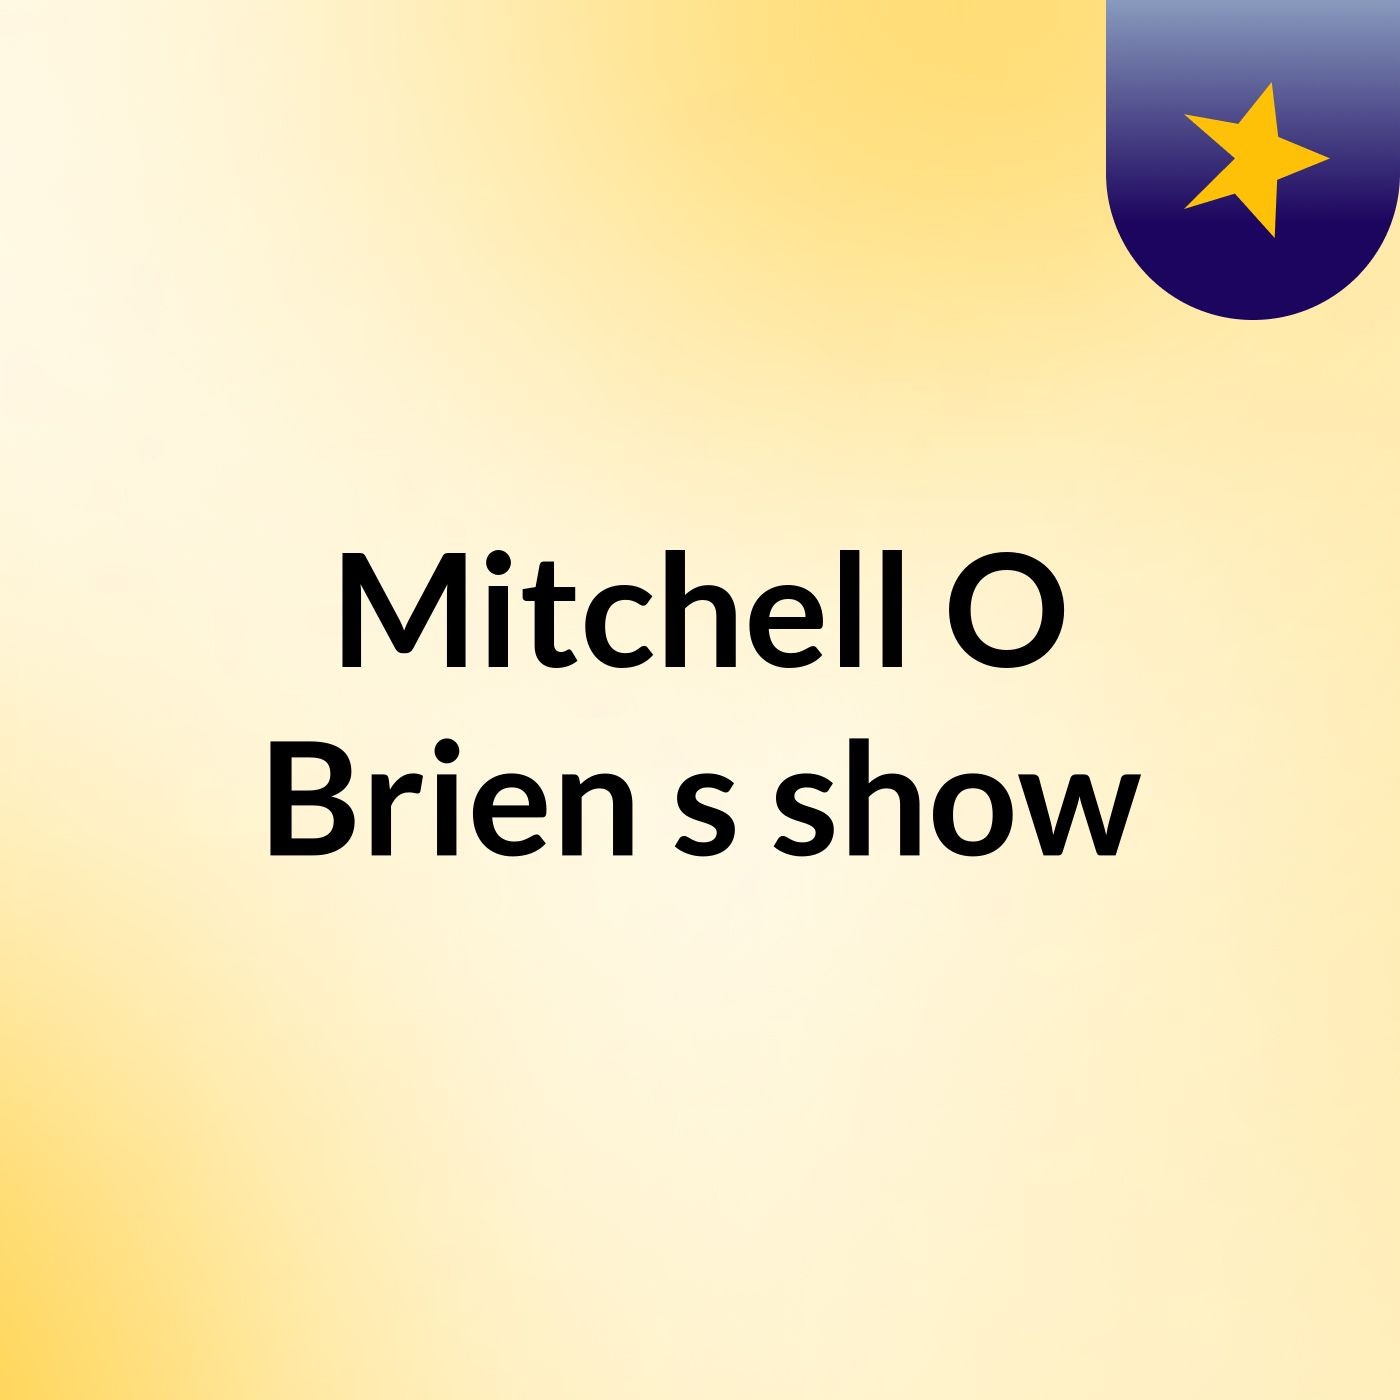 Mitchell O'Brien's show